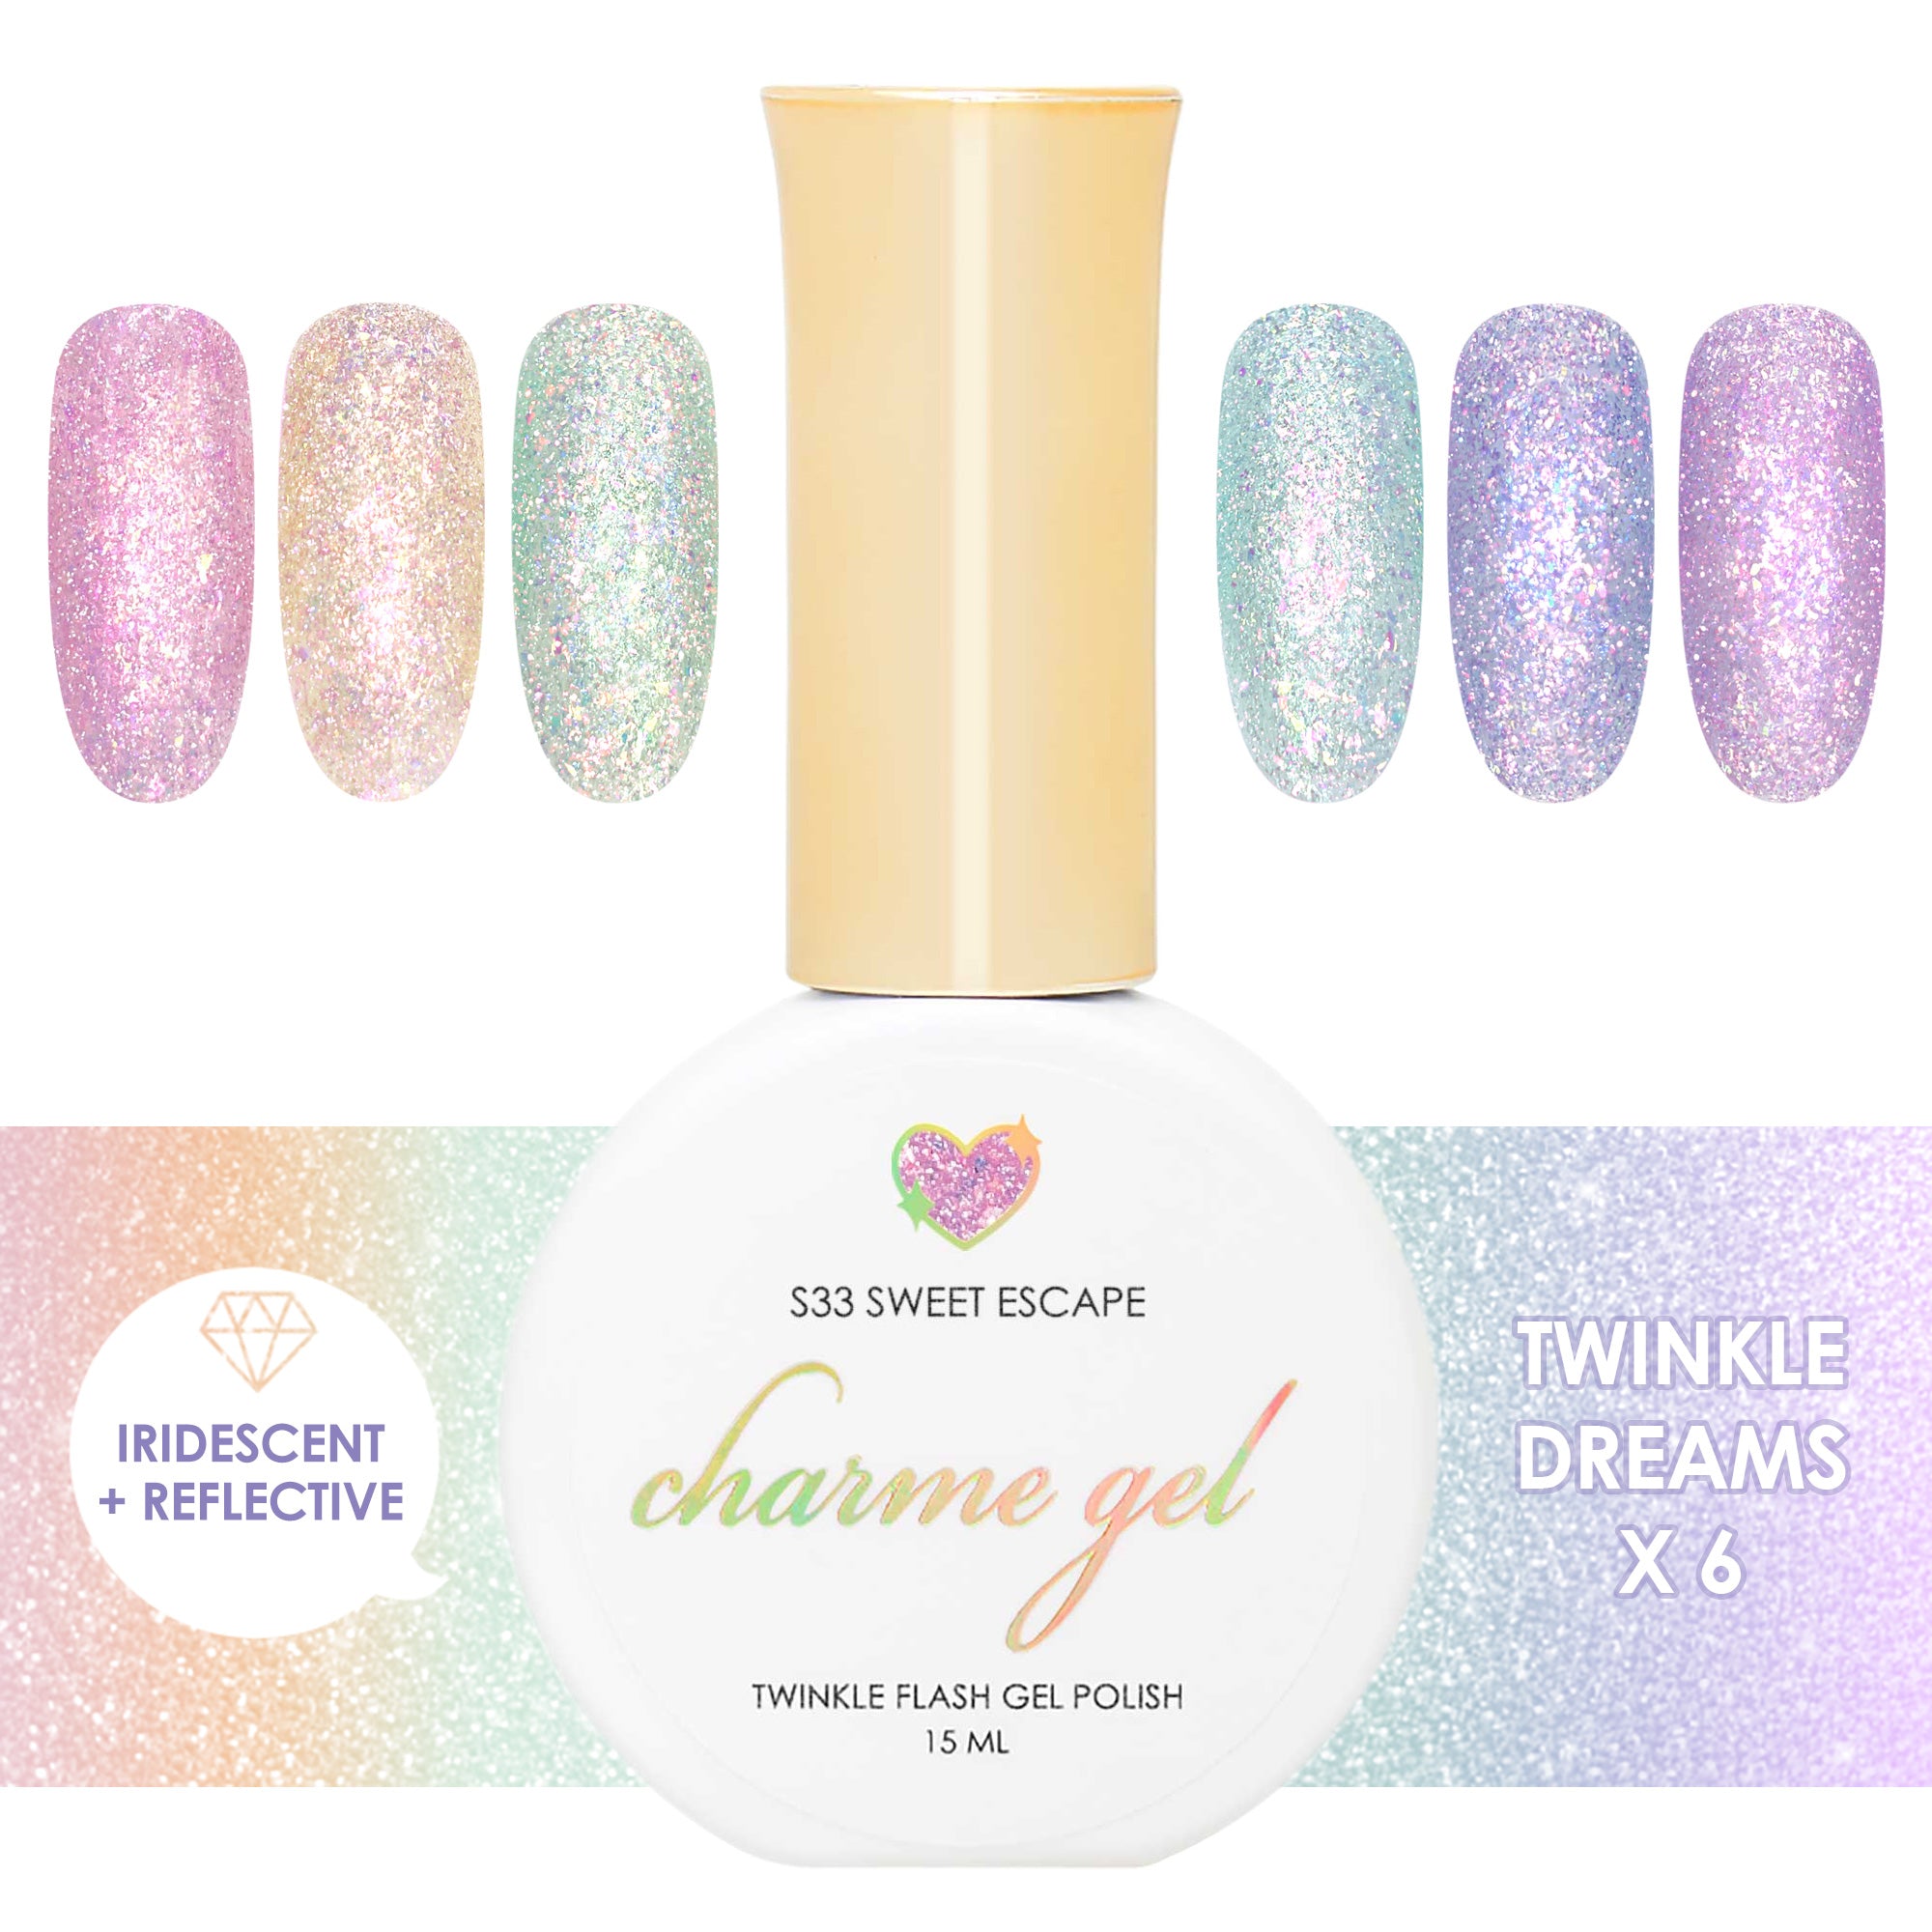 Charme Gel Twinkle Dreams Collection / 6 Colors Rainbow Mermaid Iridescent Flash Polish